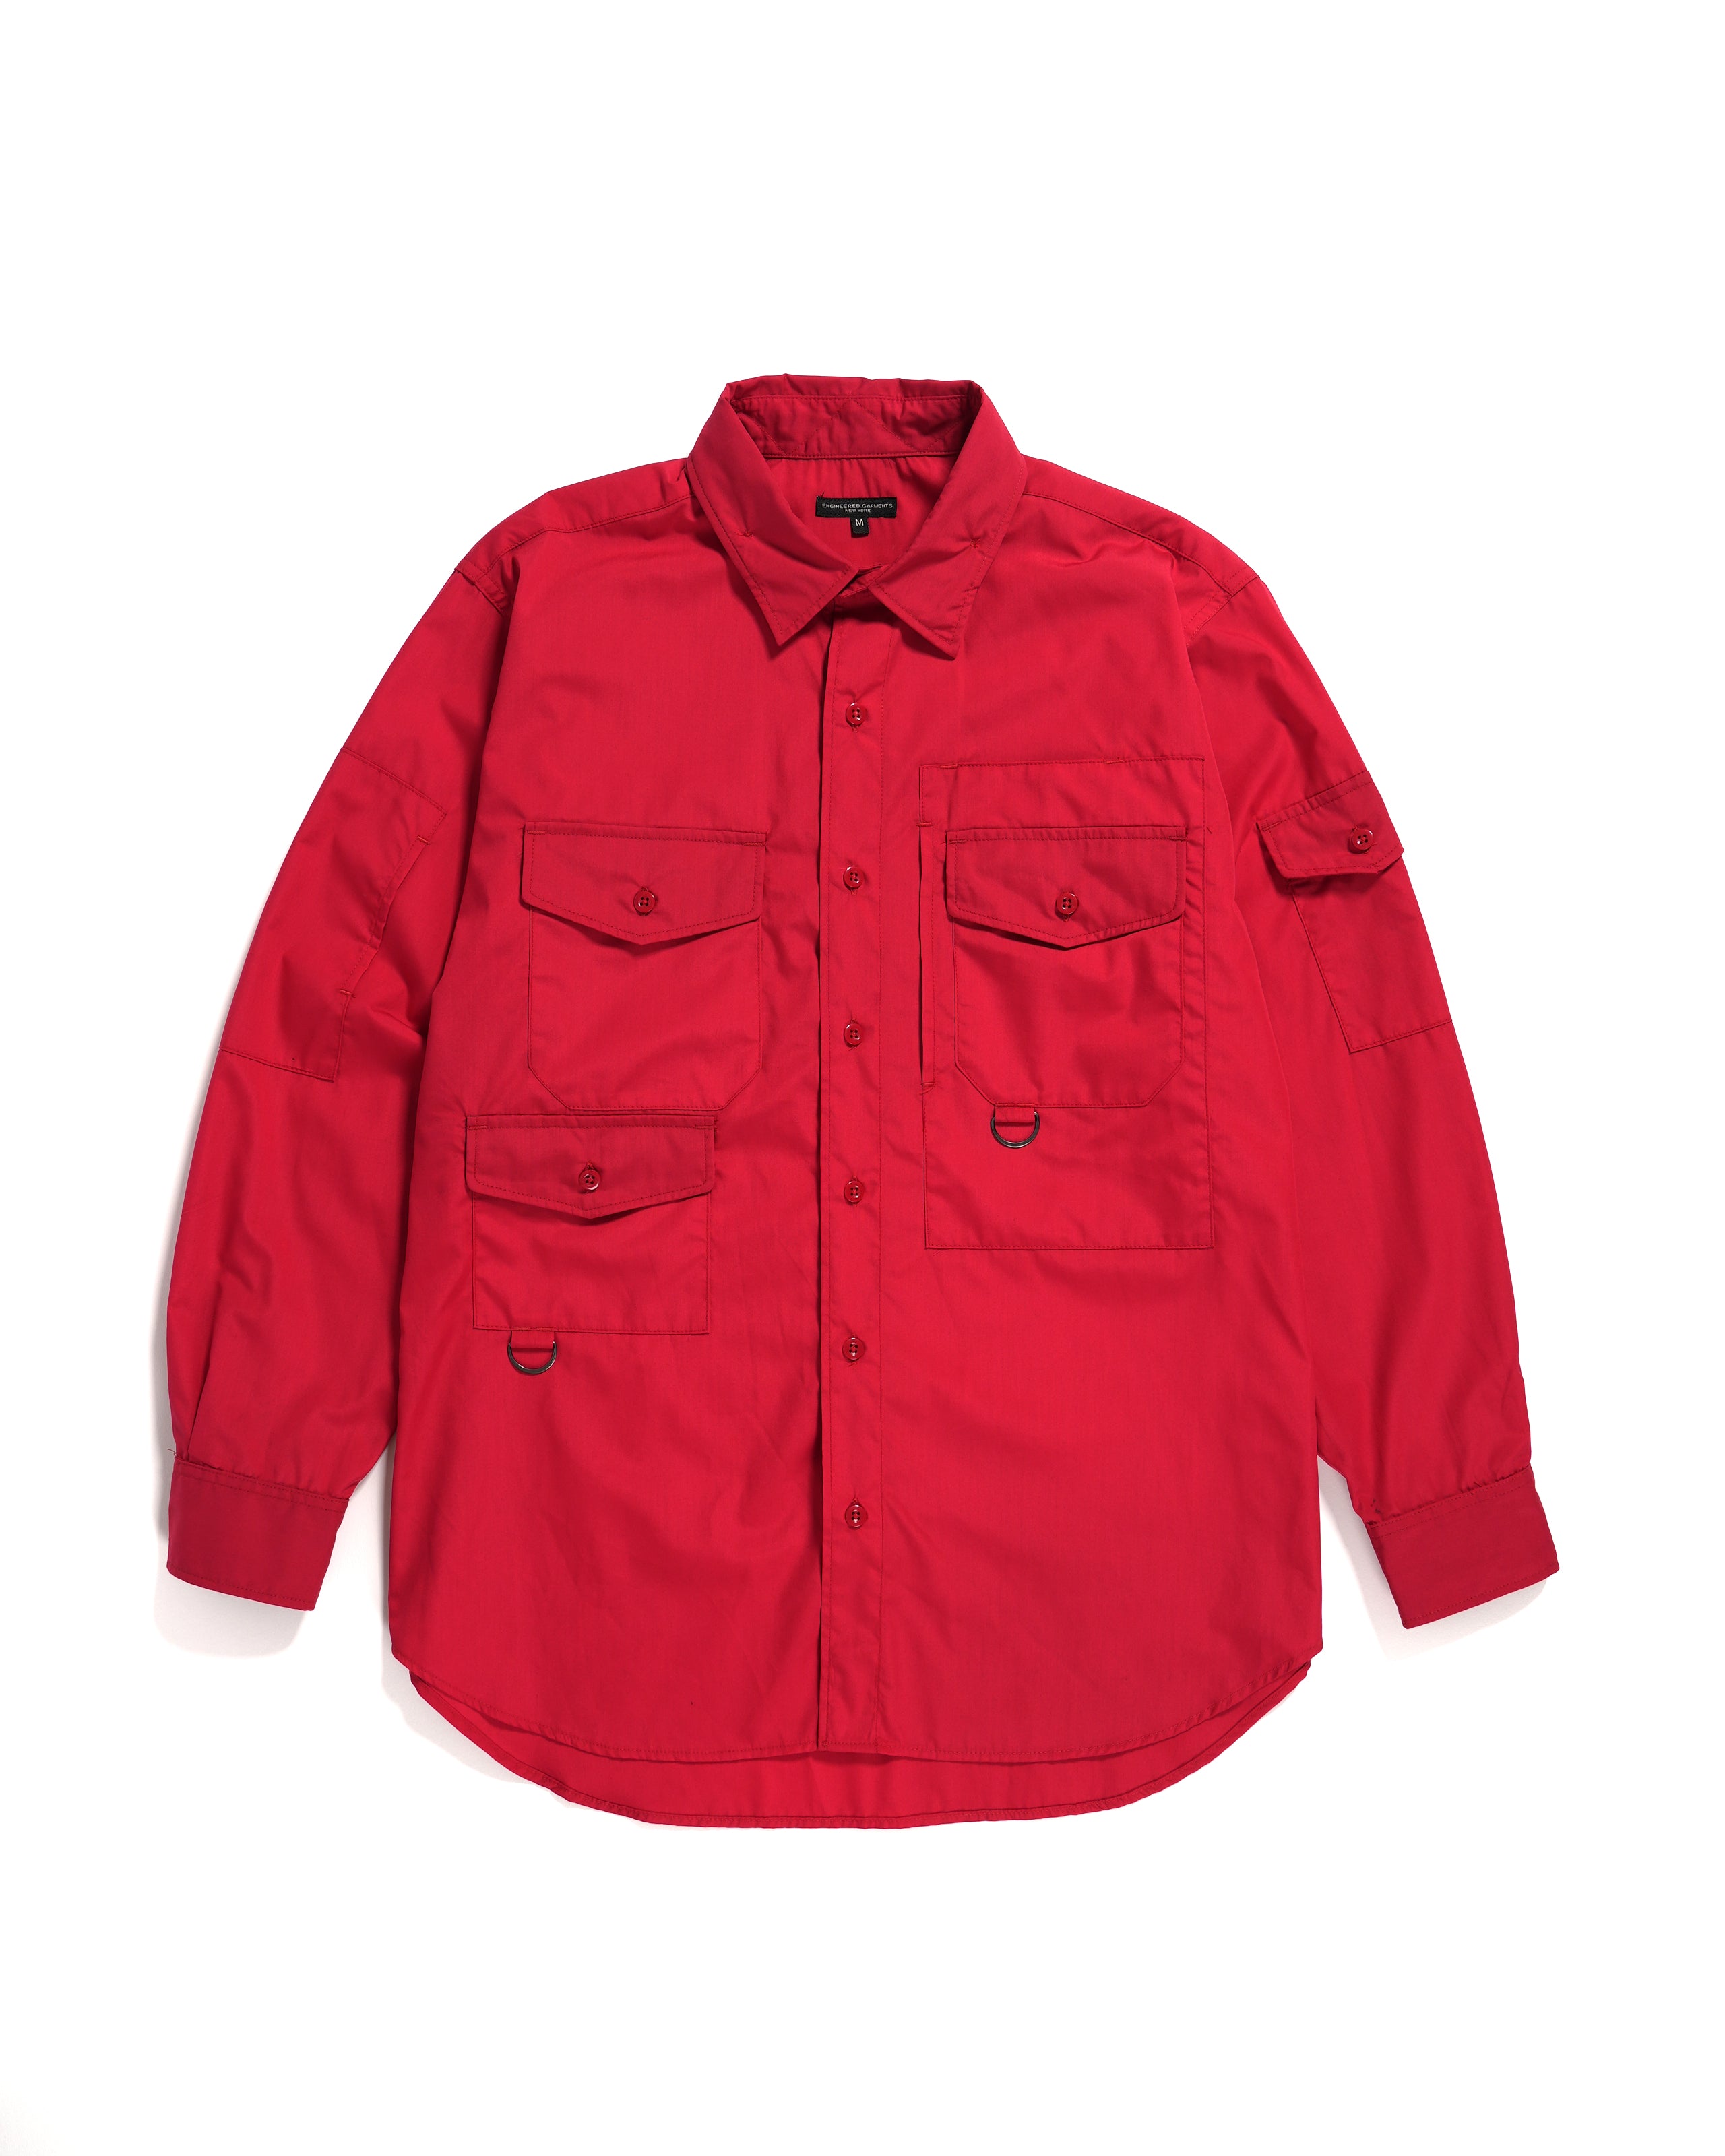 Trail Shirt - Red Lt. Weight PC Poplin